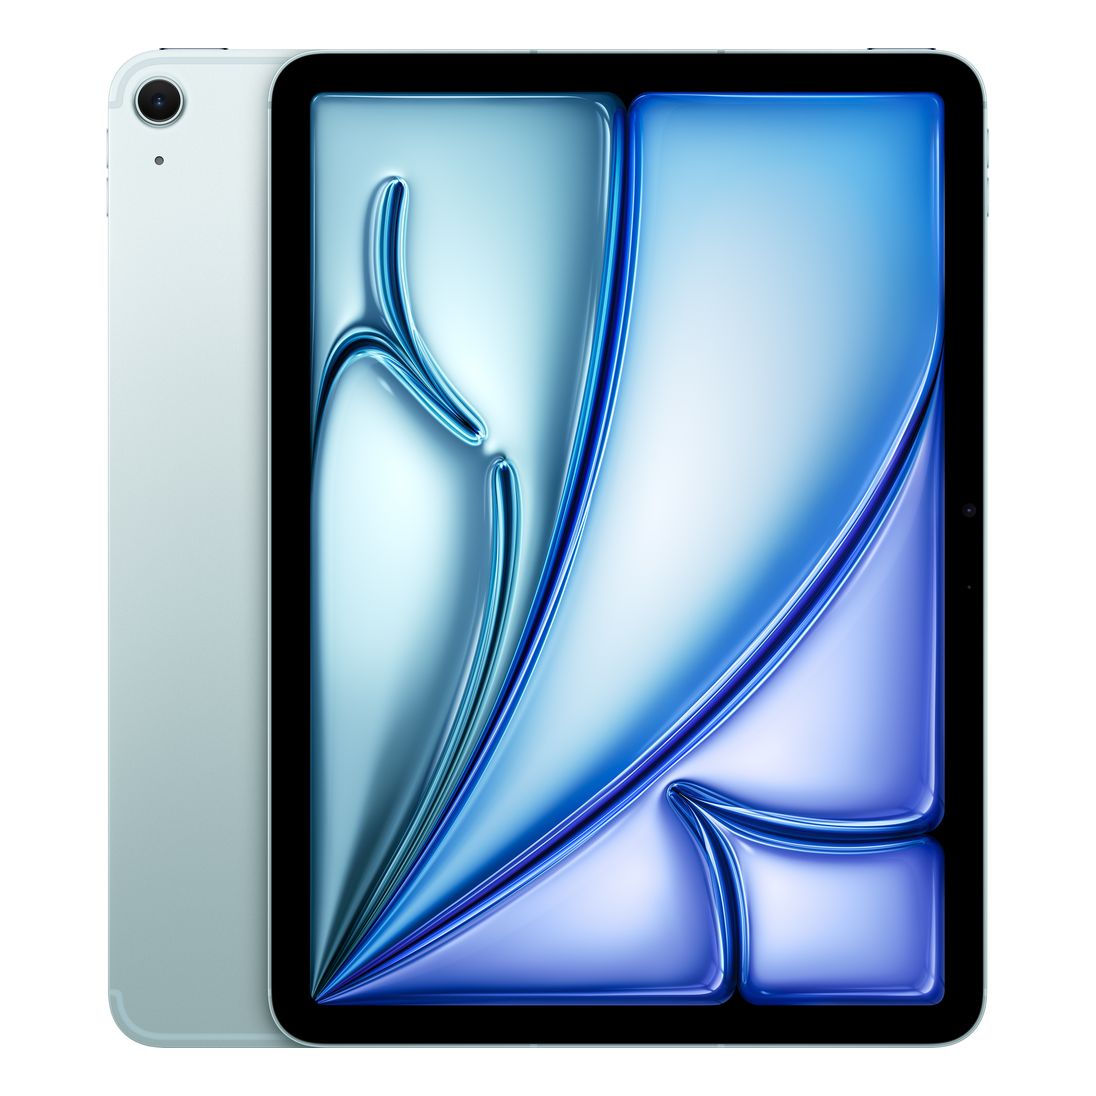 Apple 11-inch iPad Air (M2) Wi-Fi 128GB - Blue